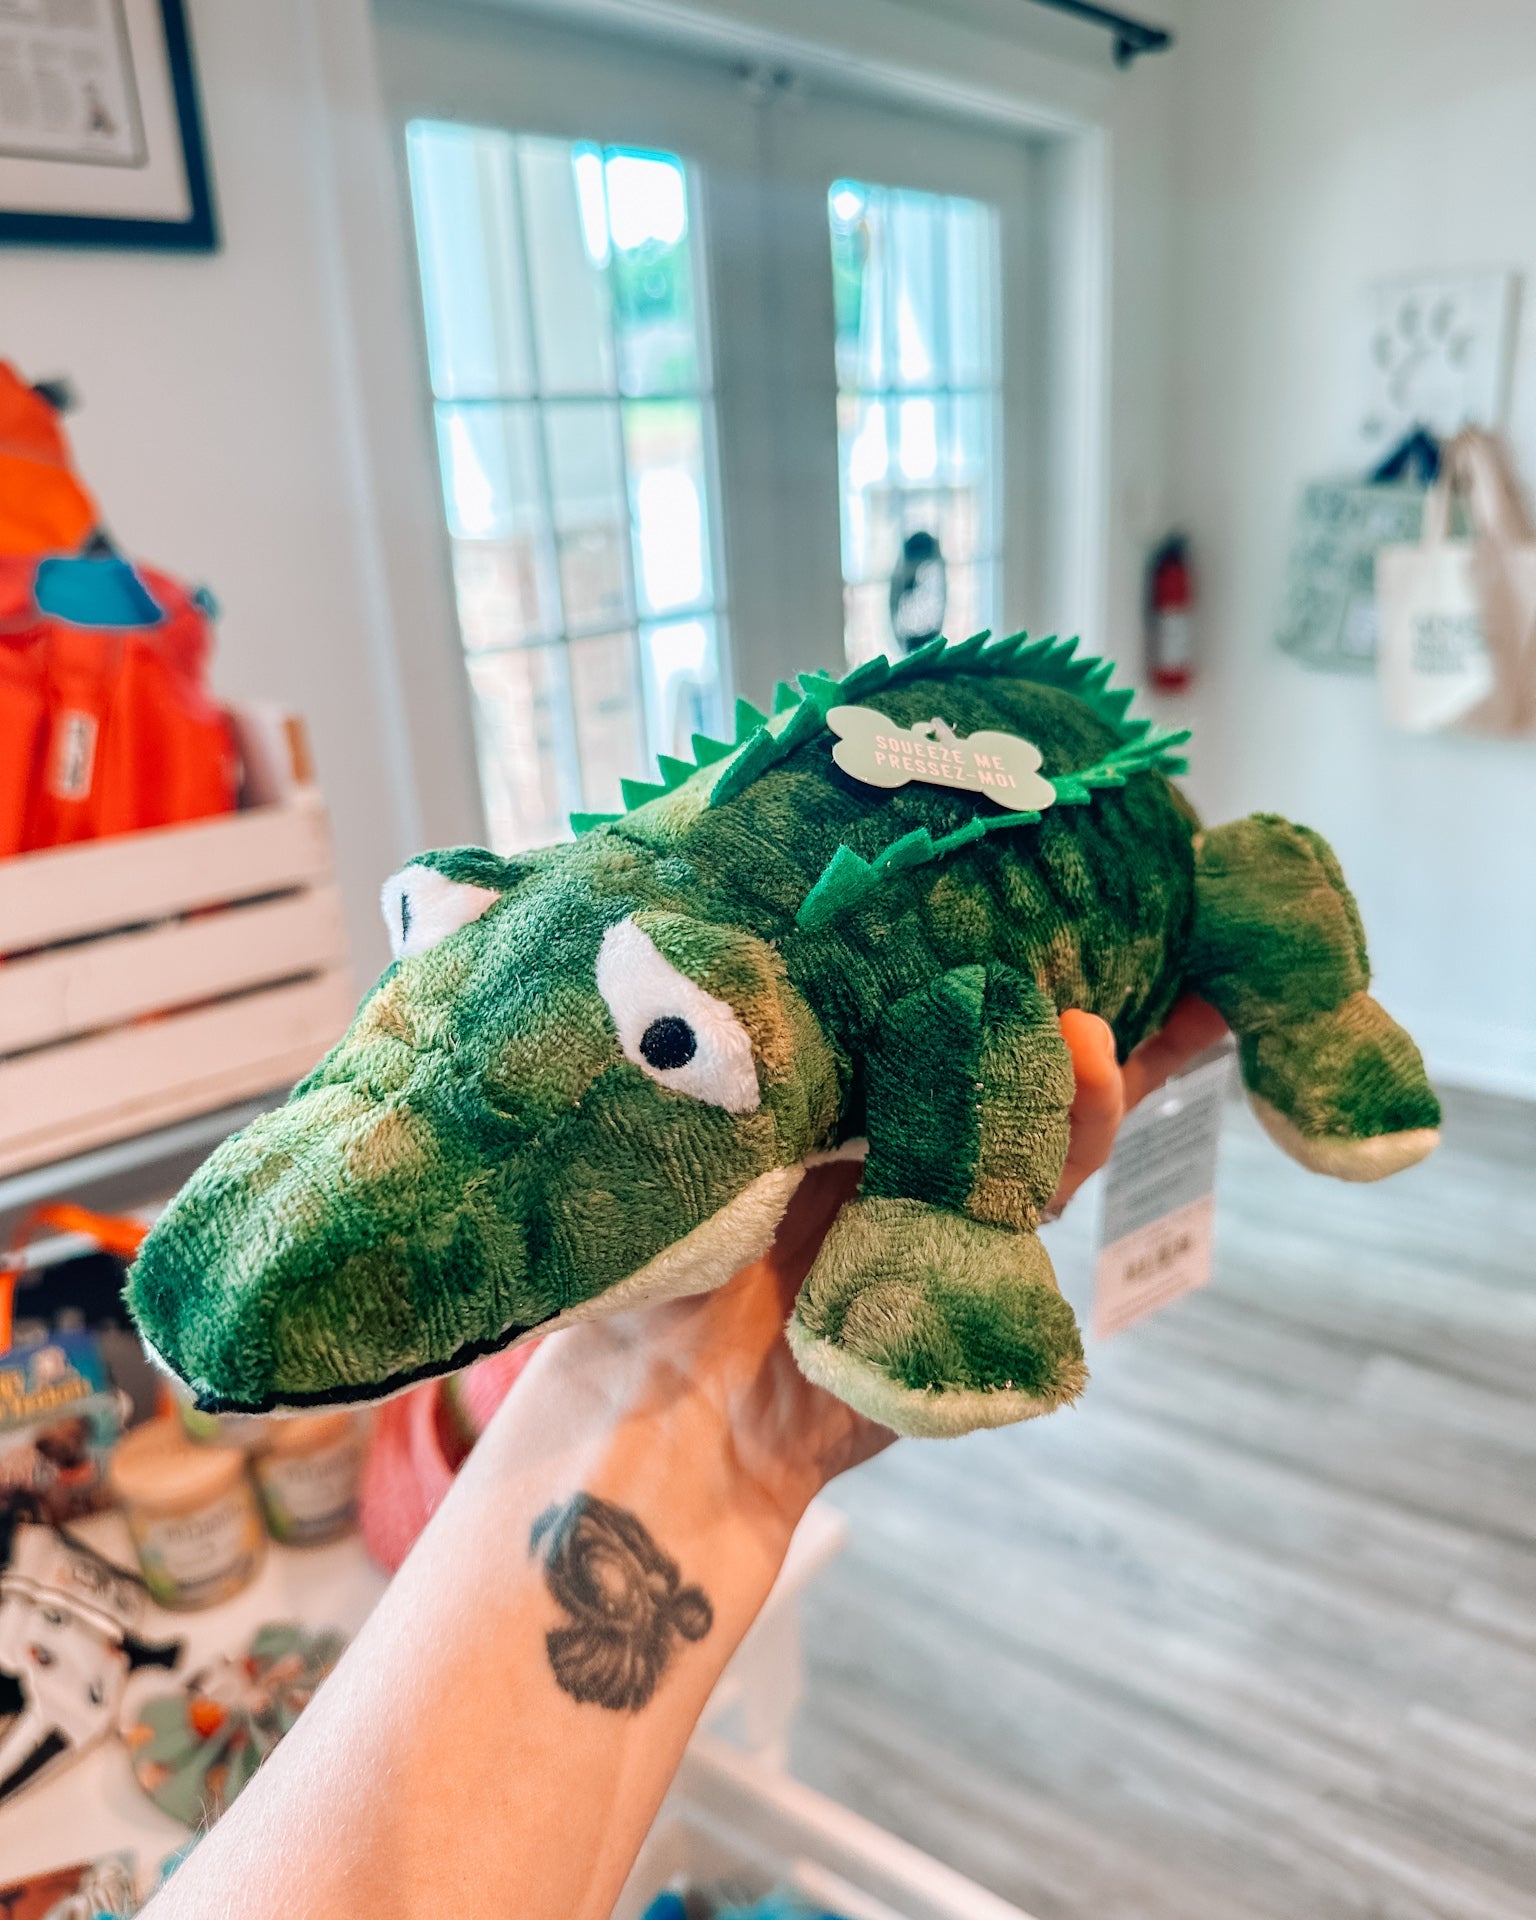 Croc-A-Gator Plush Toy - Modern Companion